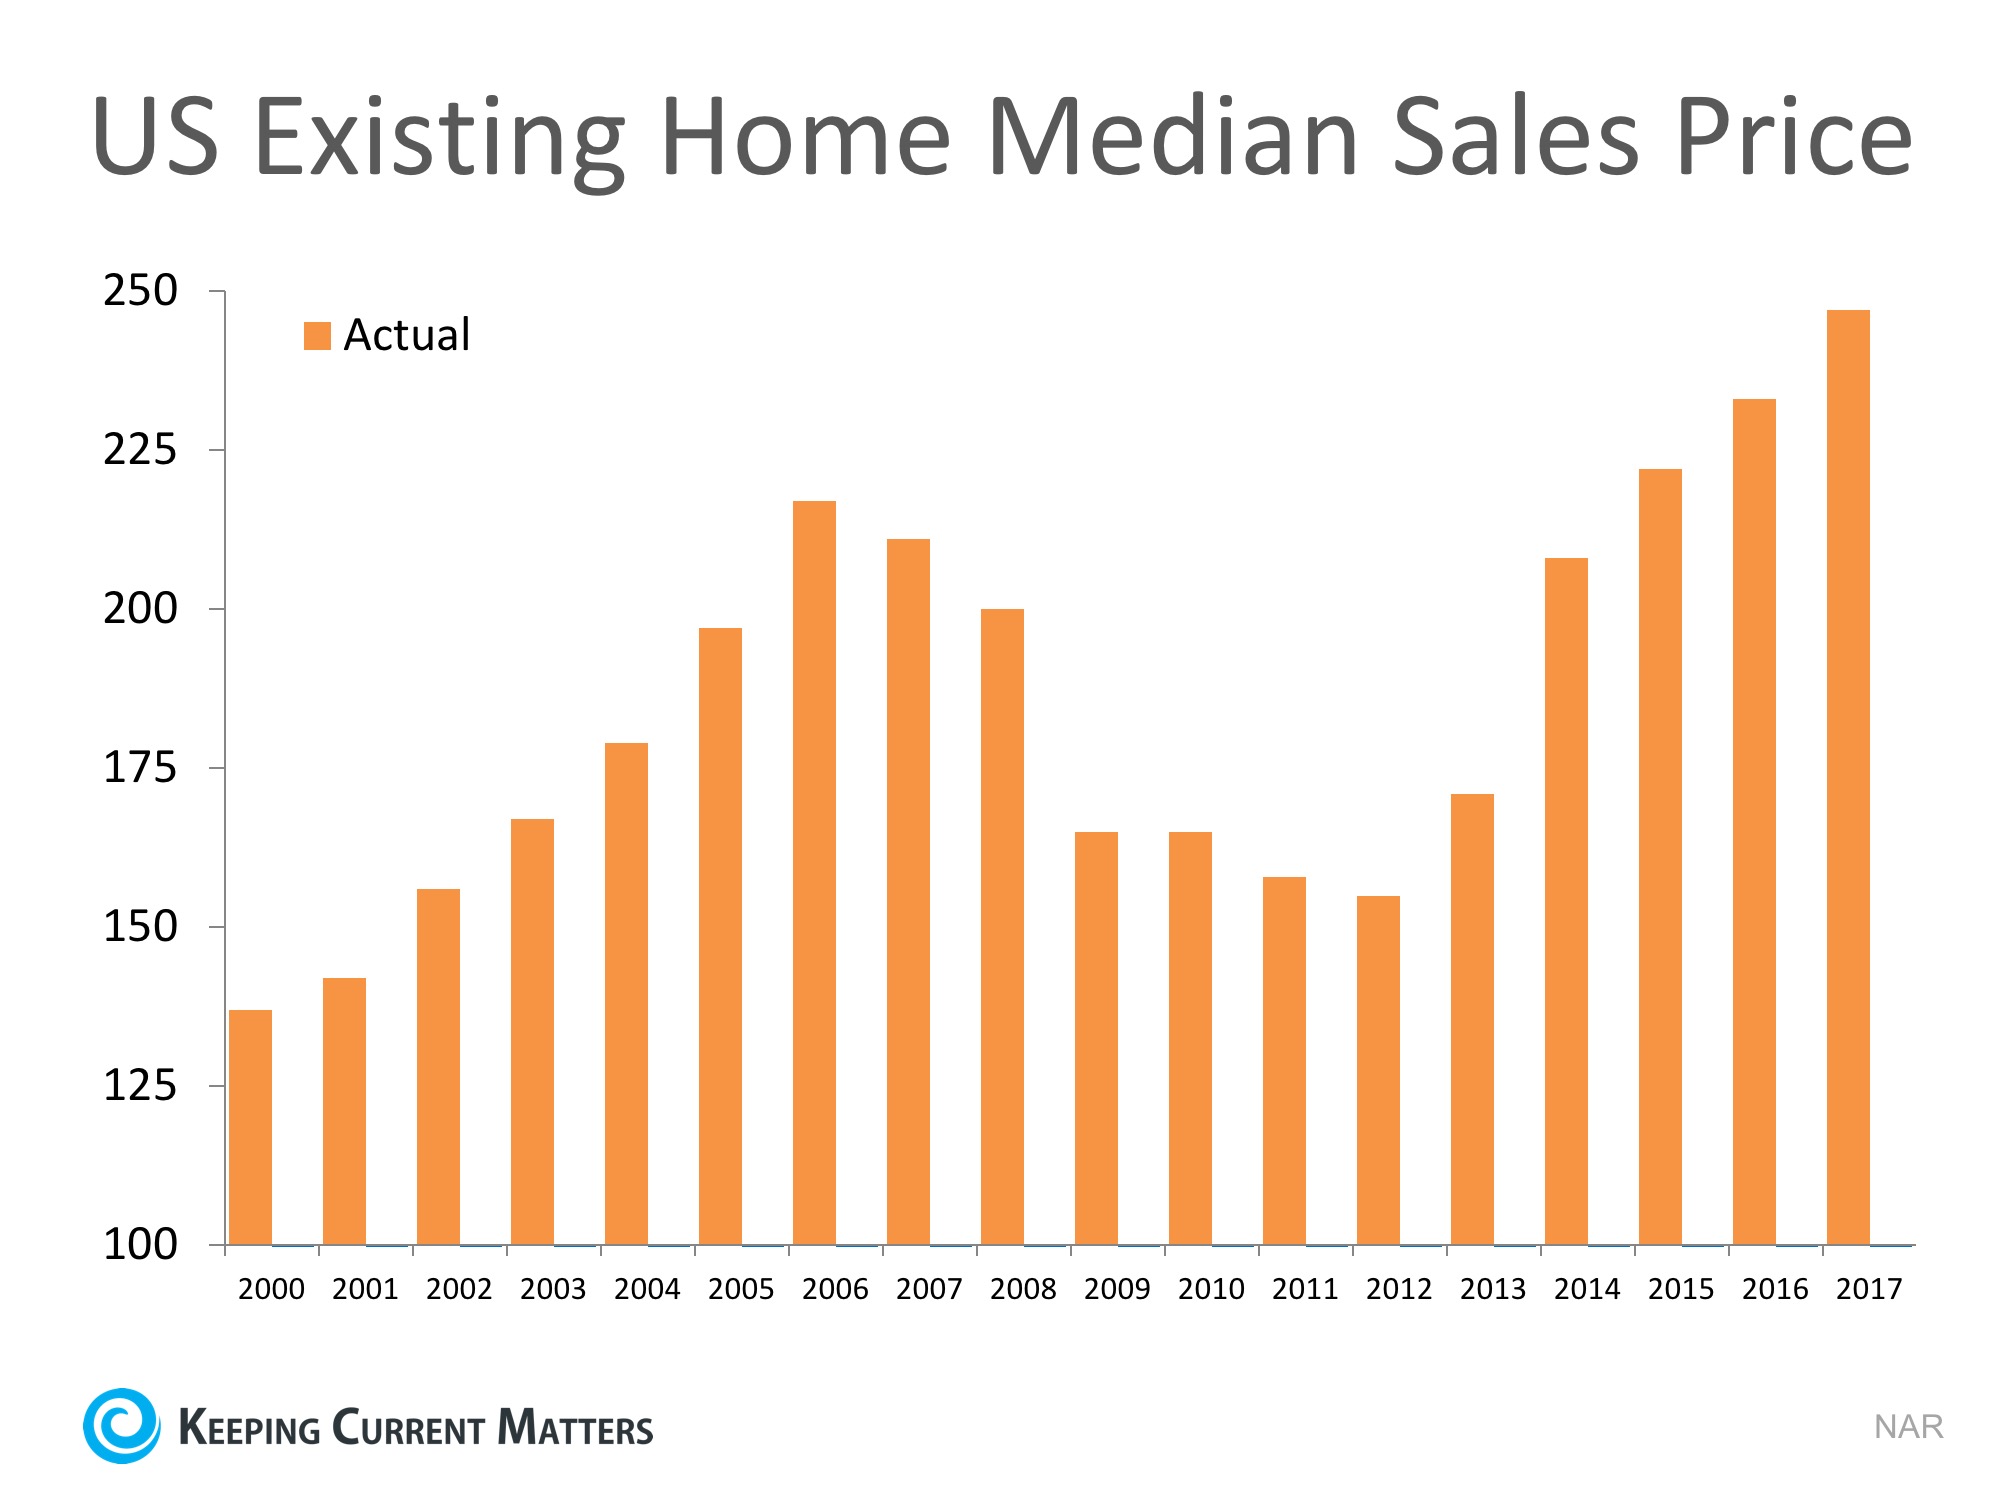 US Existing Home Median Sales Price